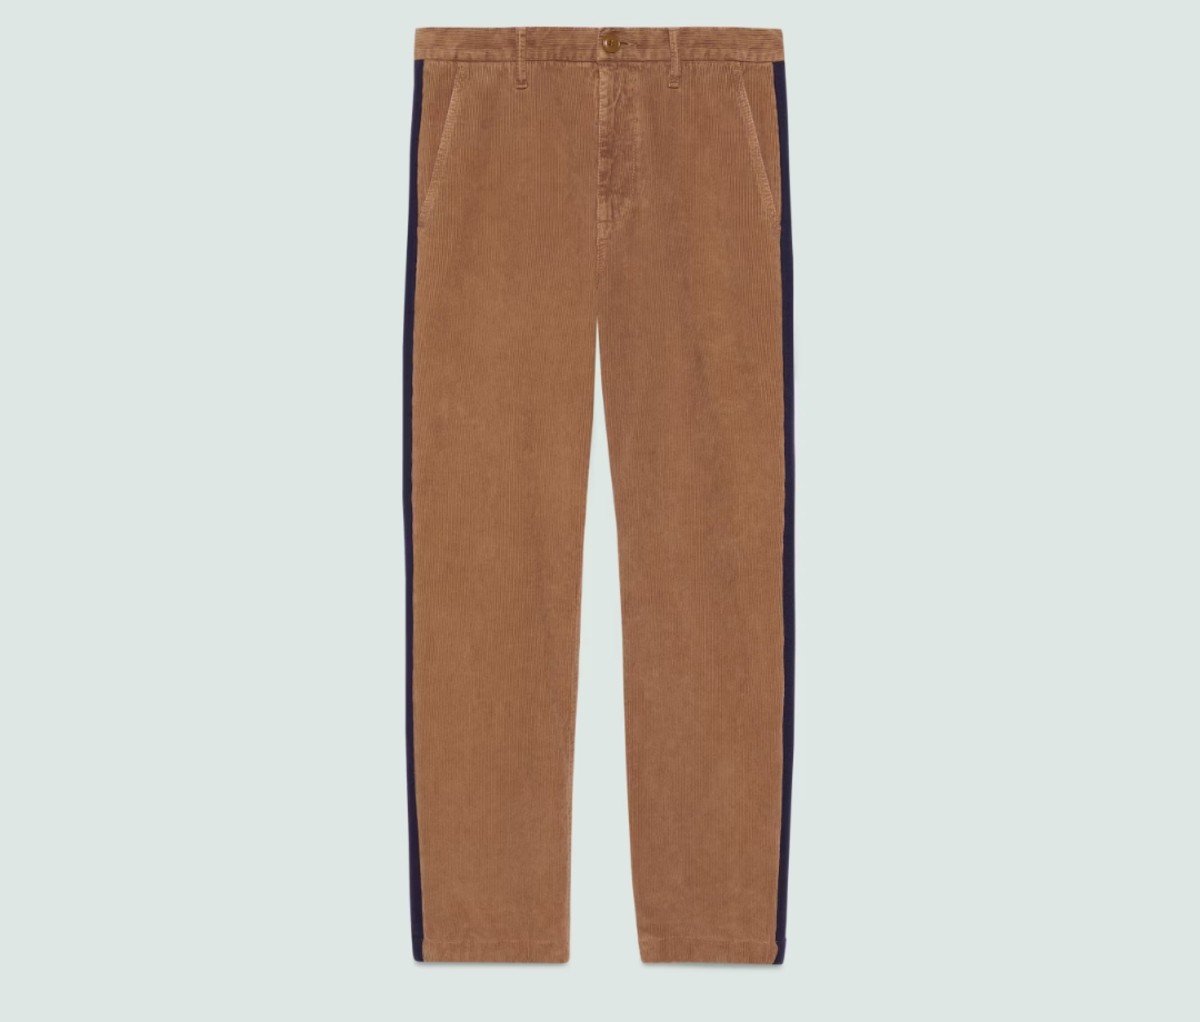 Brown Leather trousers Gucci - Yes yes jeans юбка джинсовая стильный деним  - GenesinlifeShops KN